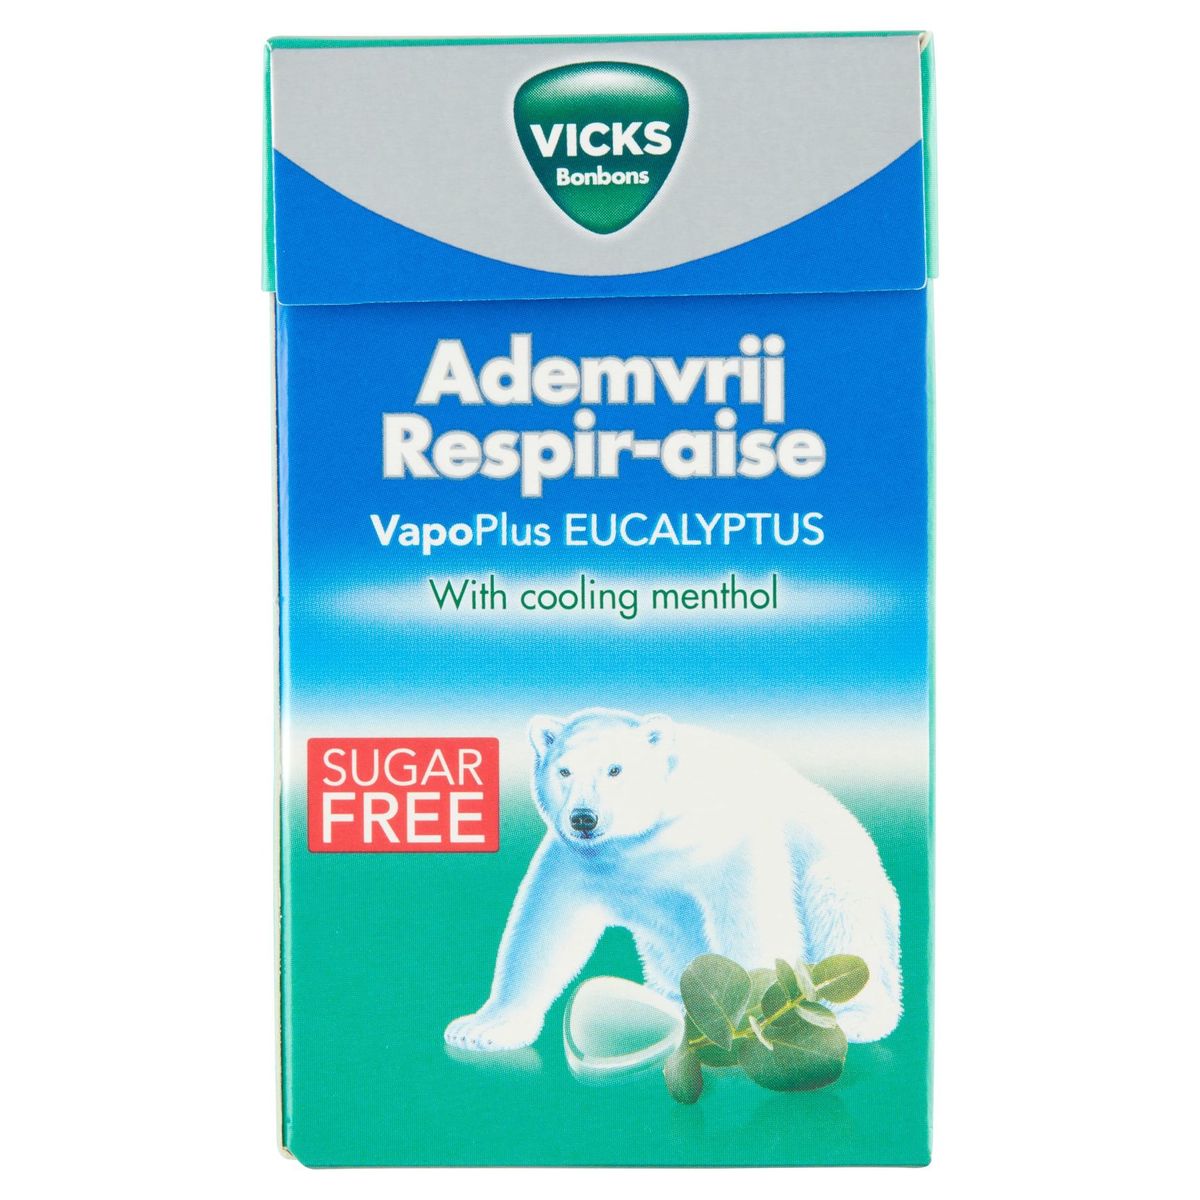 Vicks Bonbons Respir-Aise VapoPlus Eucalyptus 40 g